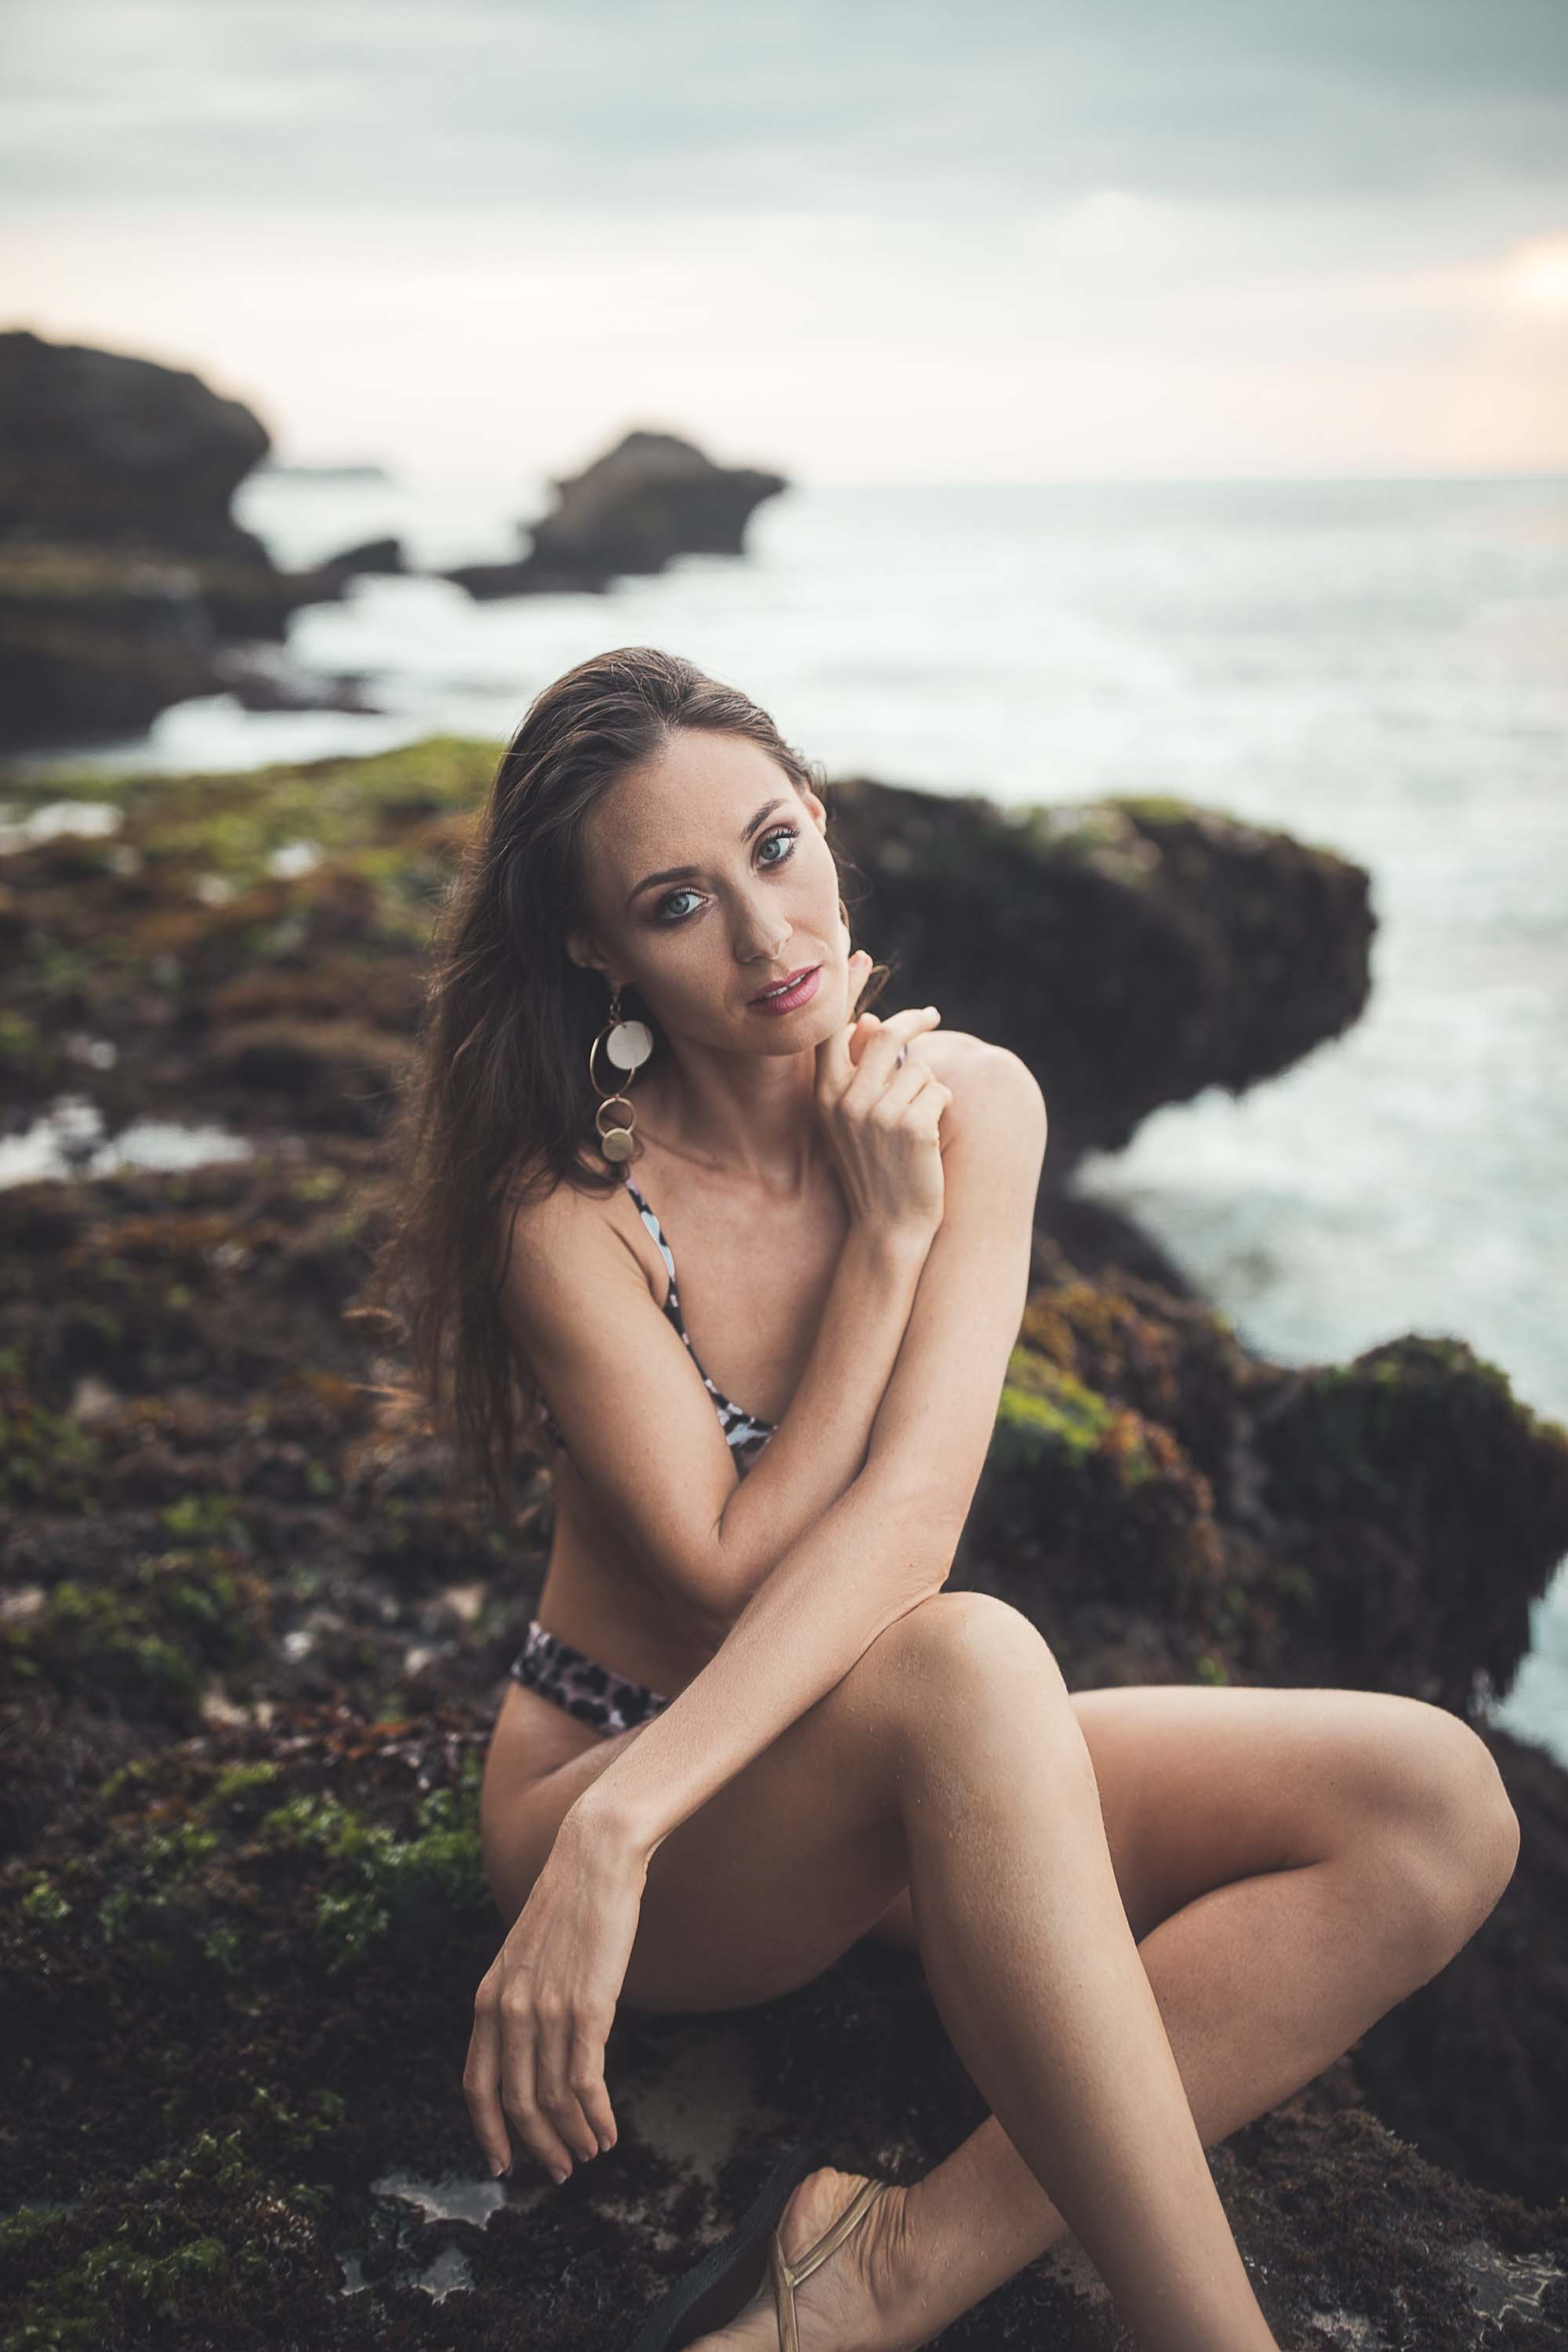 Bikini model poses in front of the sea